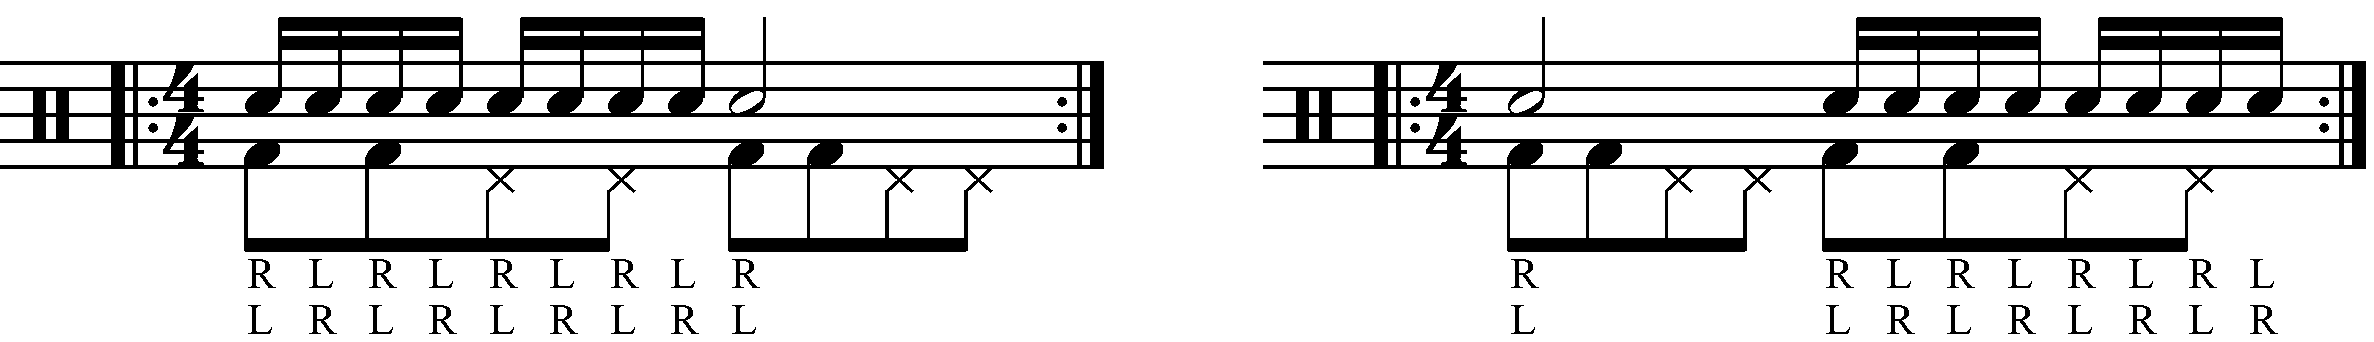 Adding eighth note feet under a single stroke 9